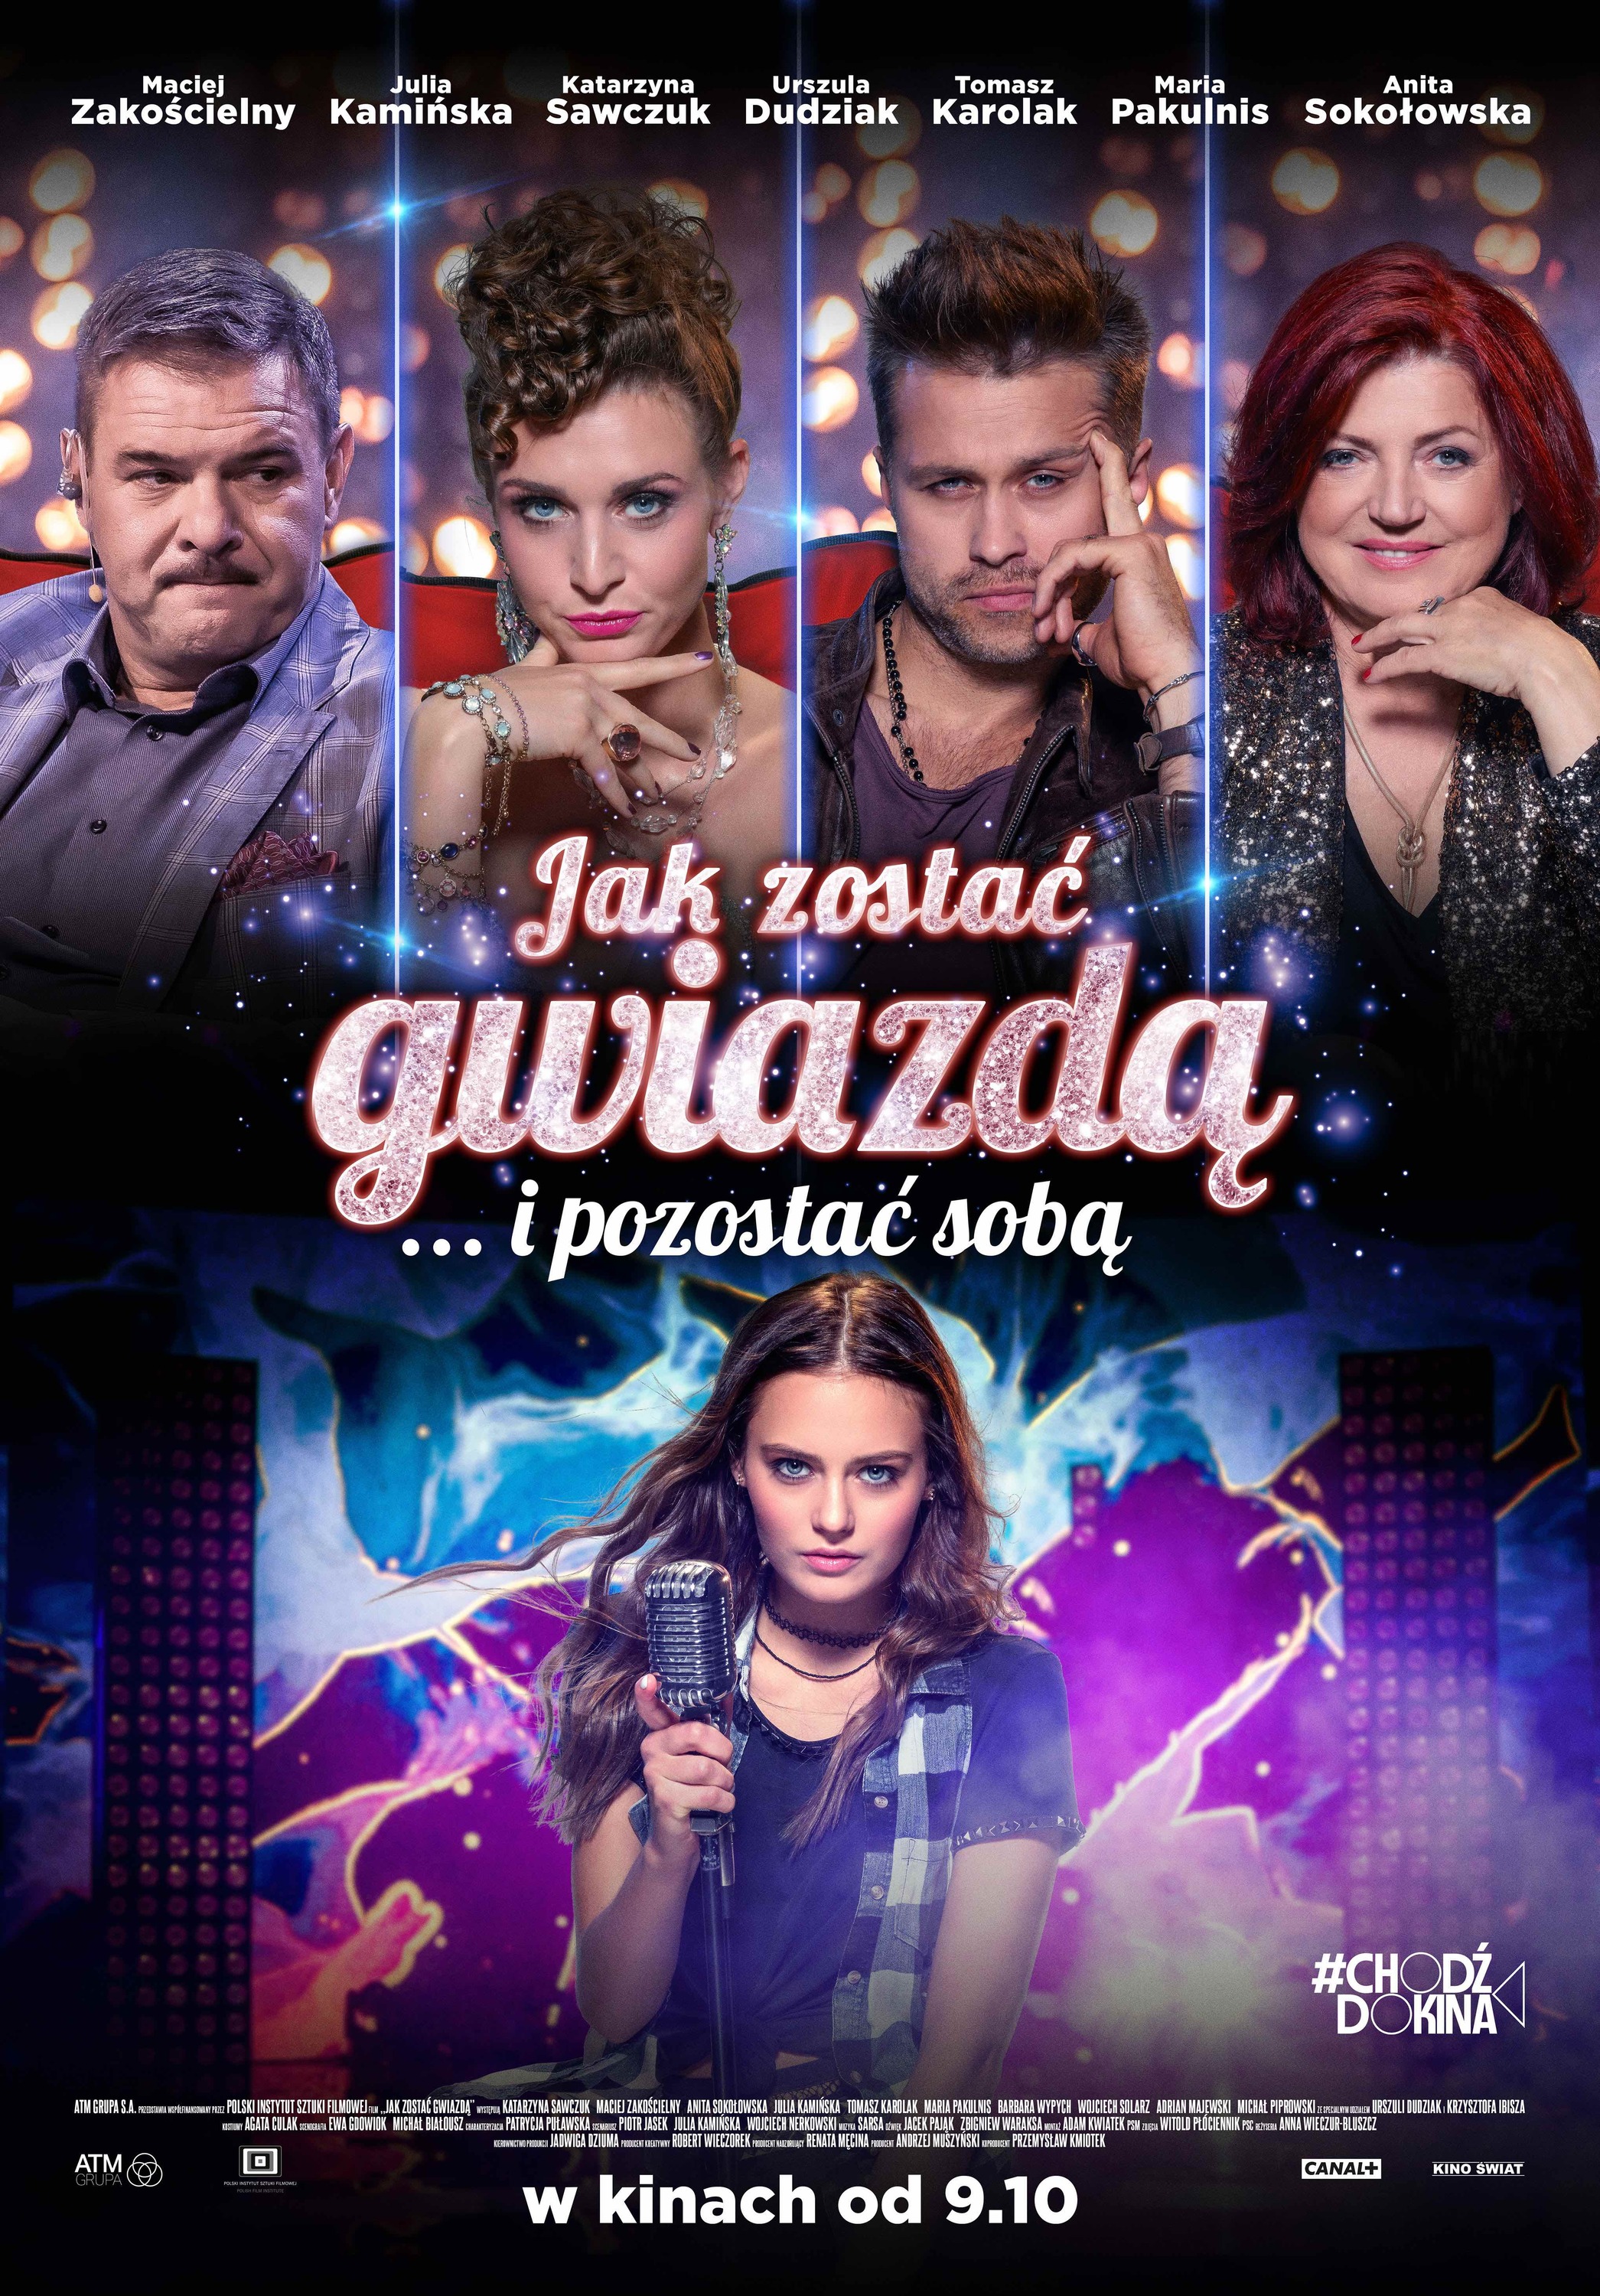 Mega Sized Movie Poster Image for Jak zostac gwiazda 